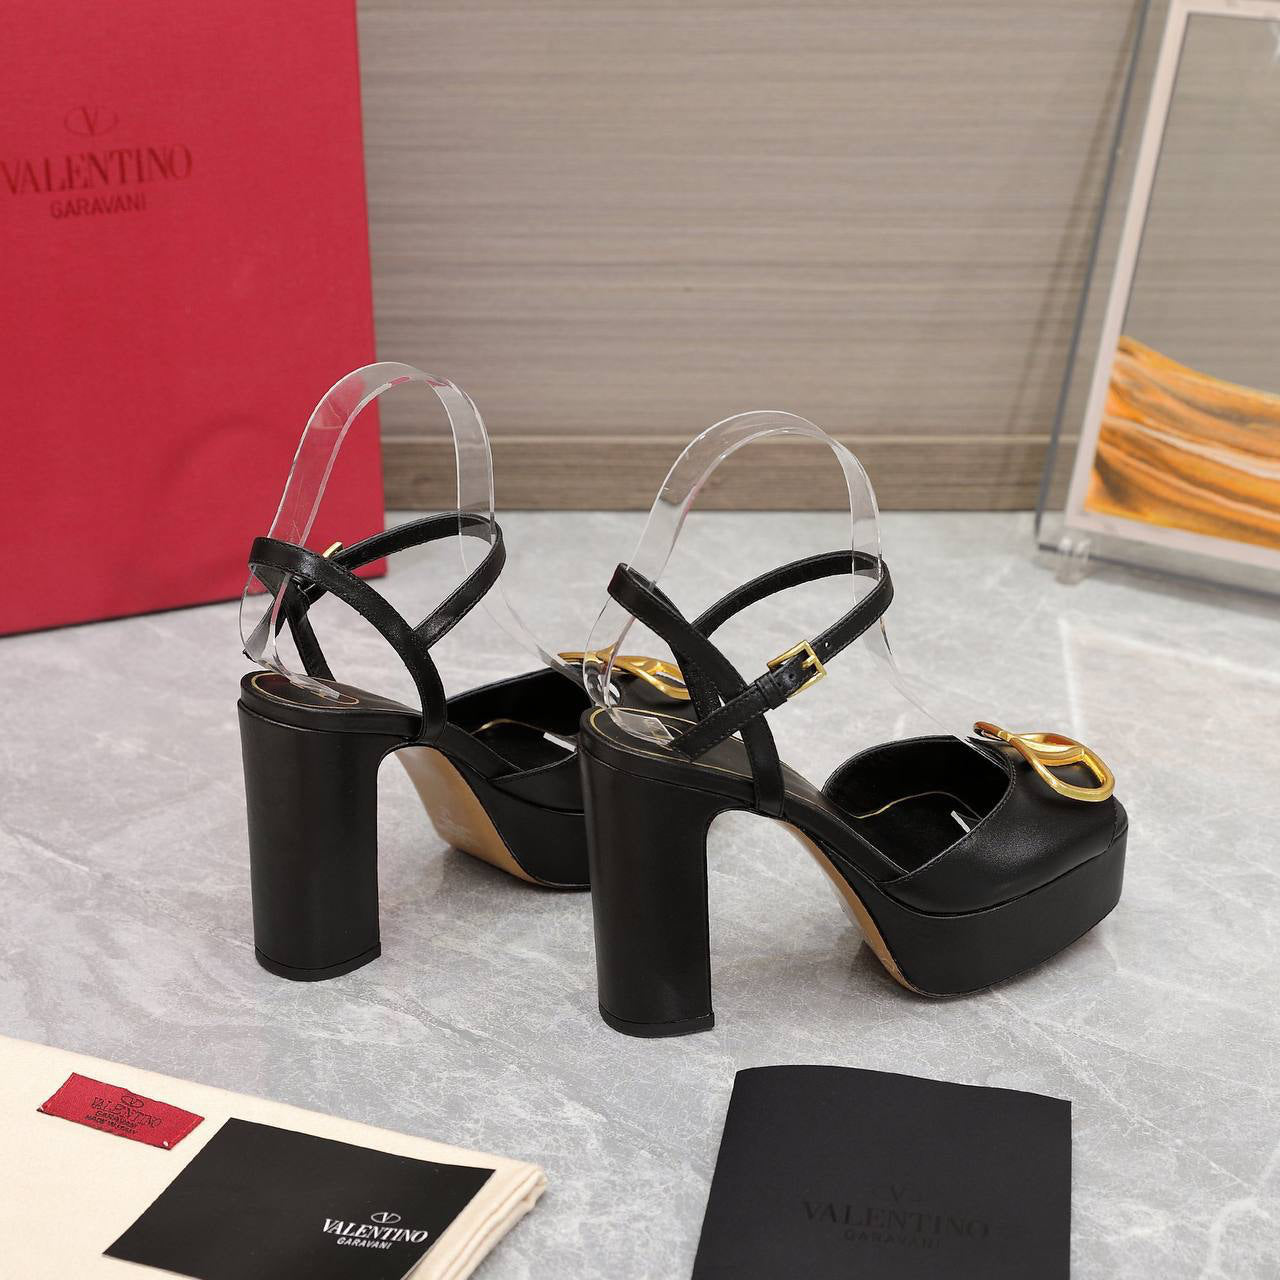 Valentino Garavani VLogo leather platform sandals